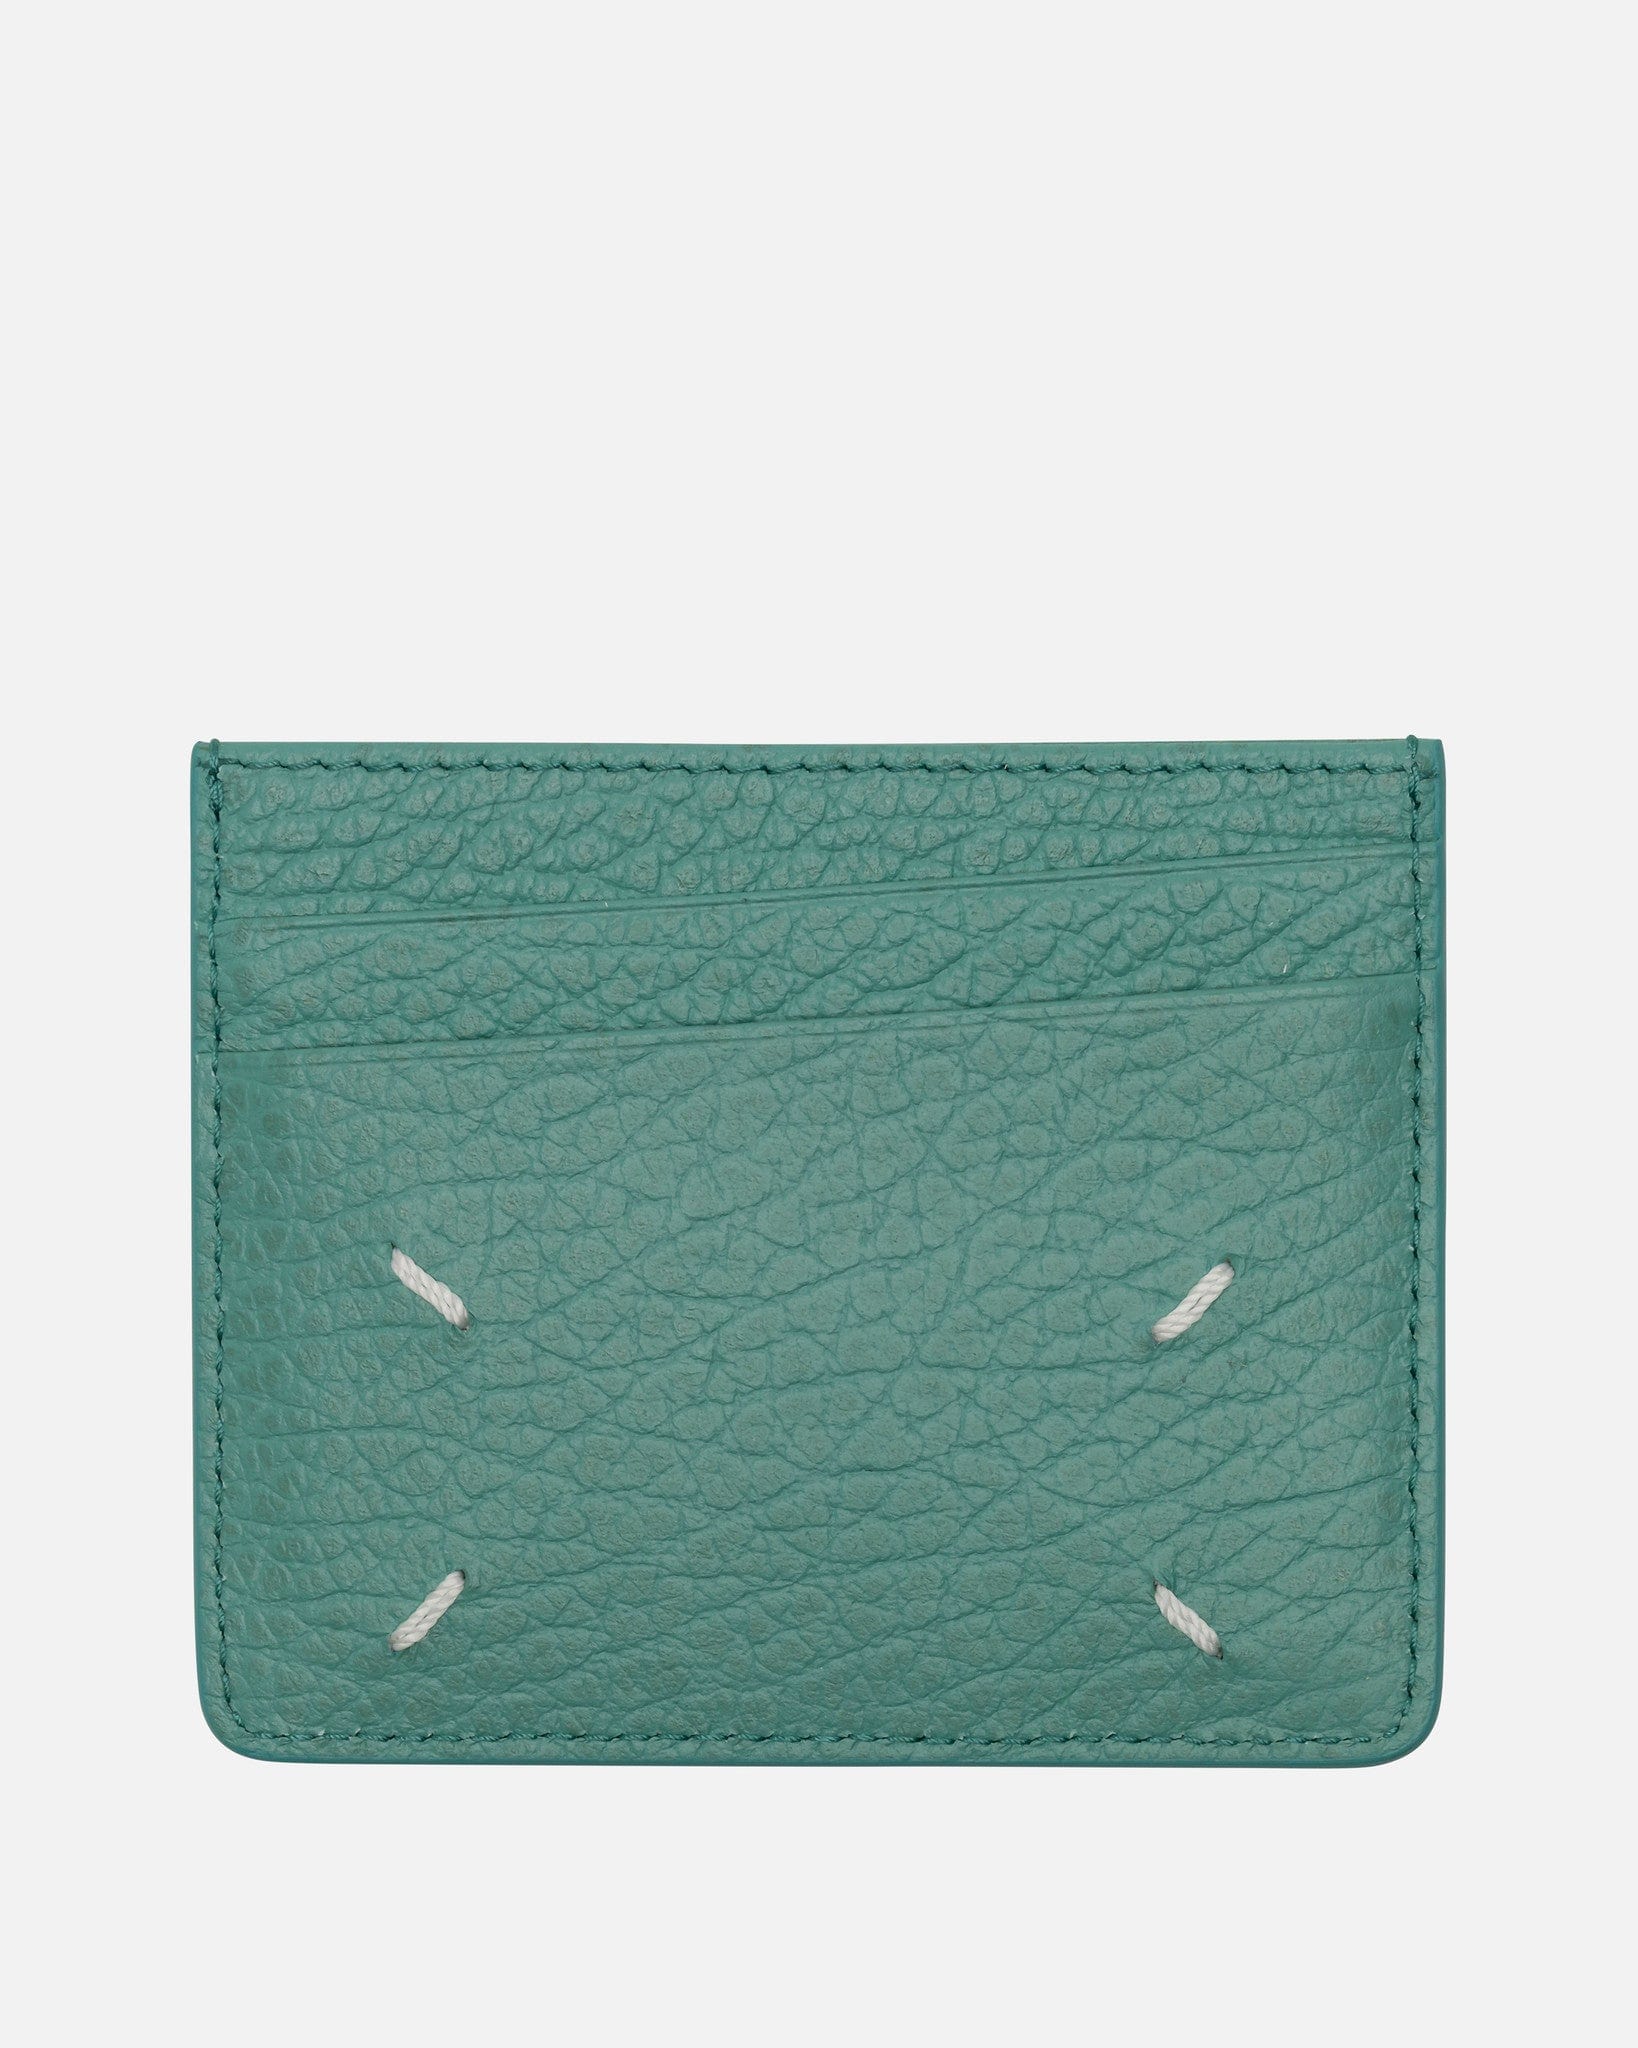 Maison Margiela Leather Goods O/S Slim Card 6cc Holder in Vert d'eau